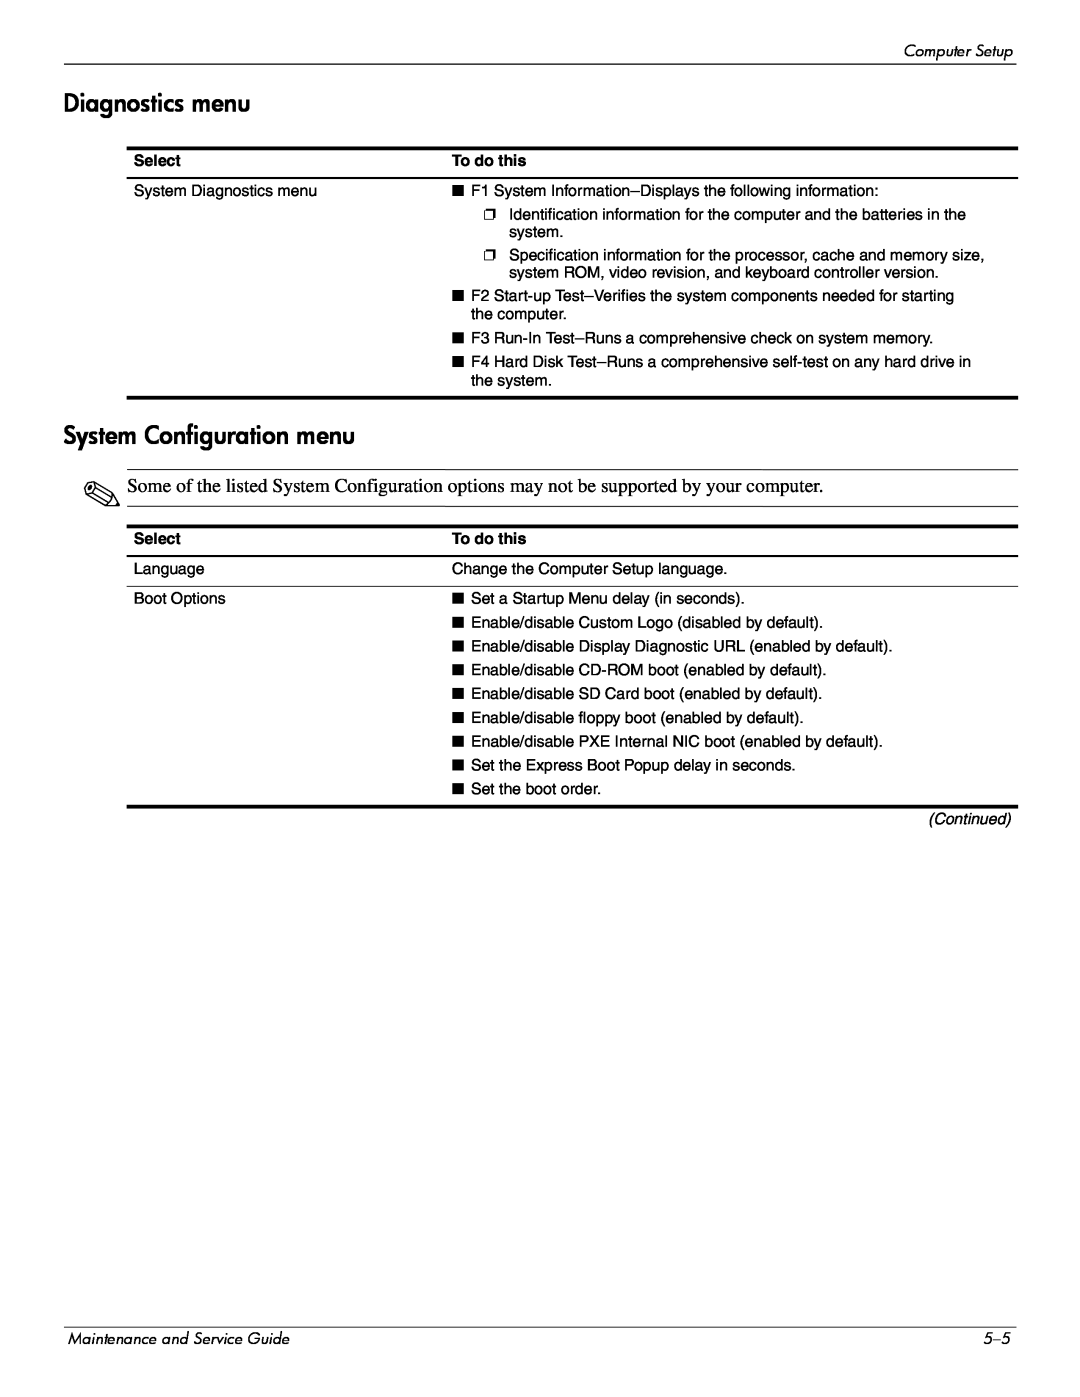 Hitachi 2730P manual Diagnostics menu, System Configuration menu 